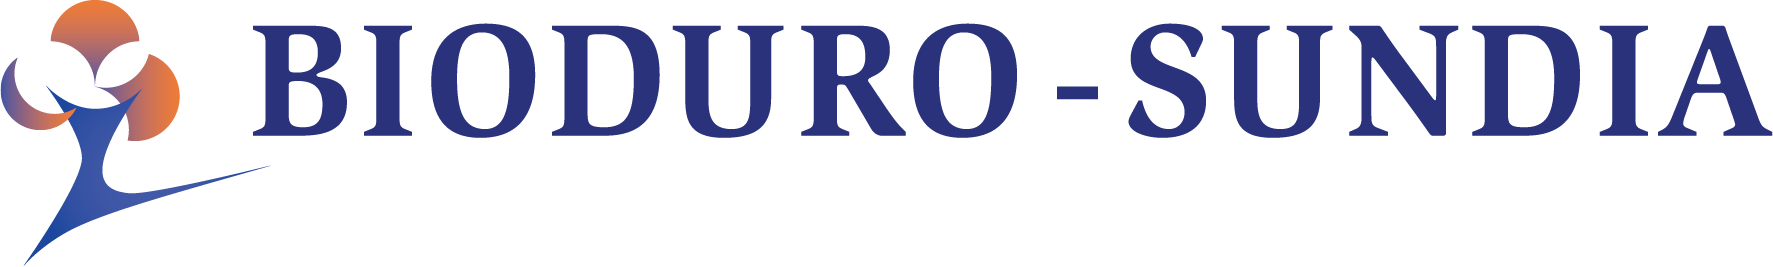 BioDuro-Sundia_logo_color